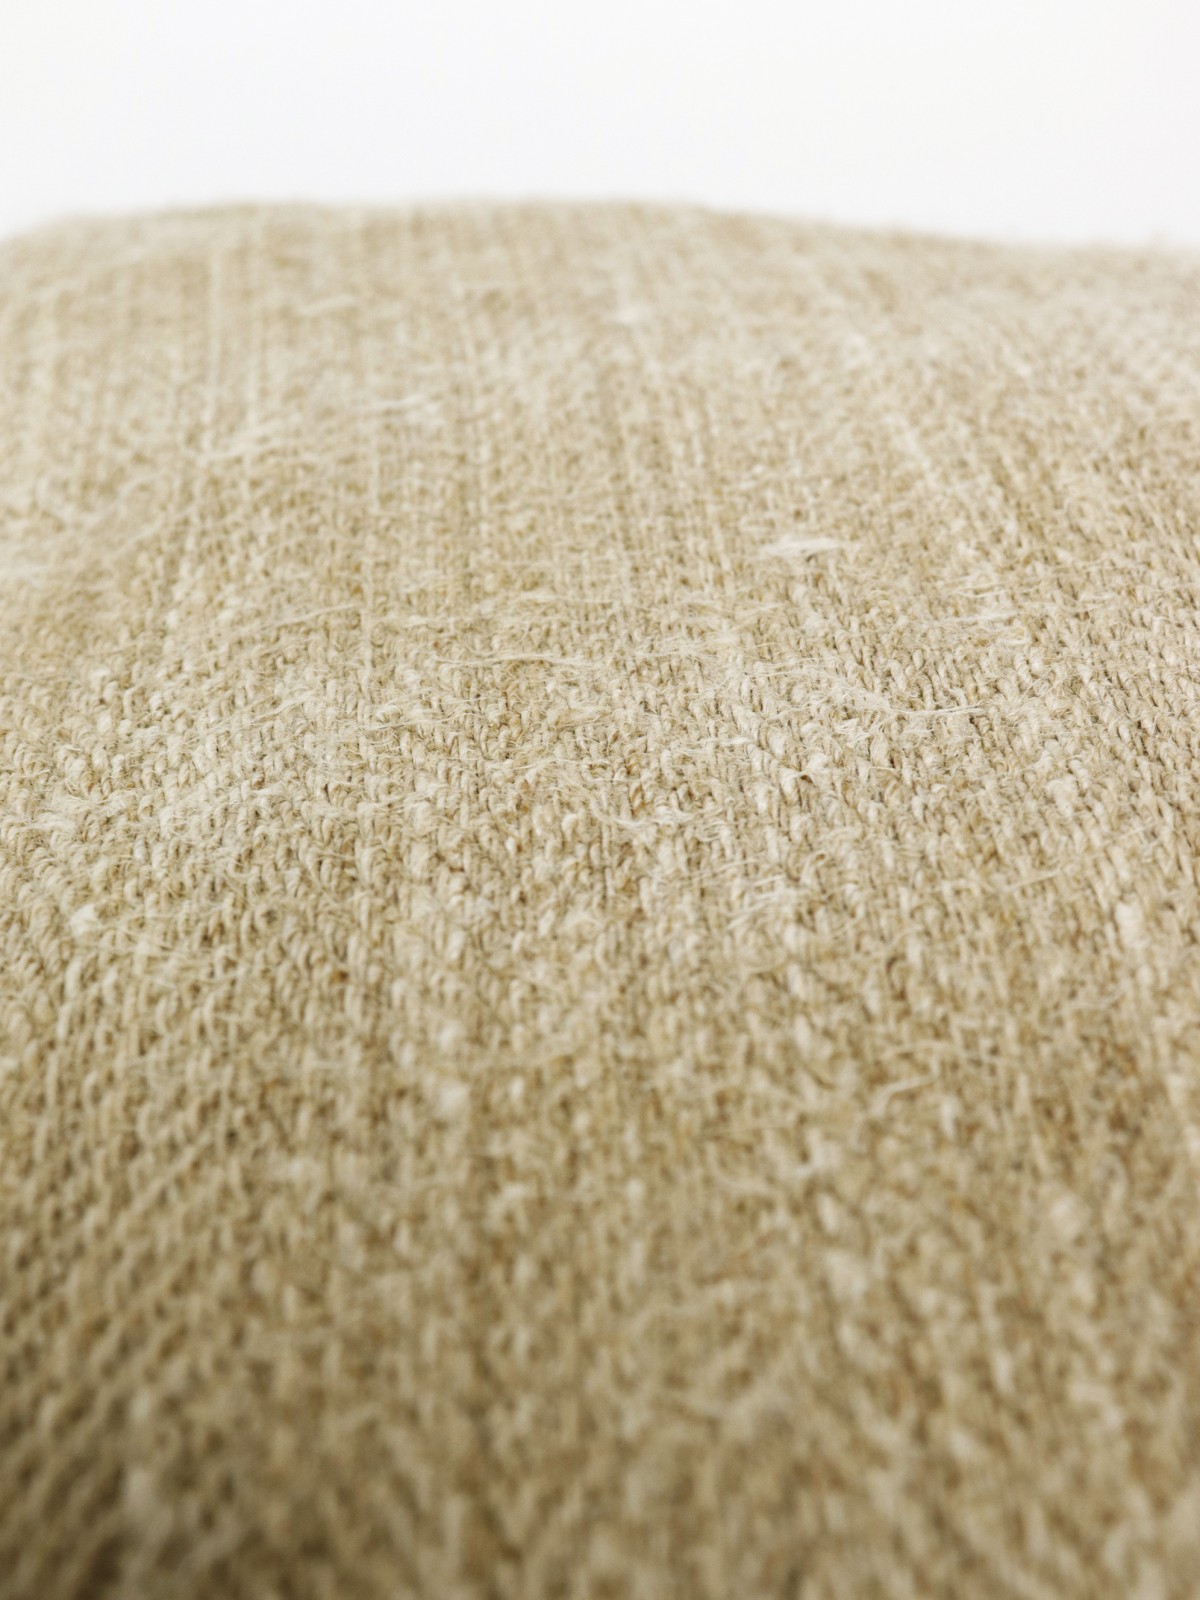 1950's grain sack fabric cushion, vintage hemp fabric cushion, brown.remake cushion